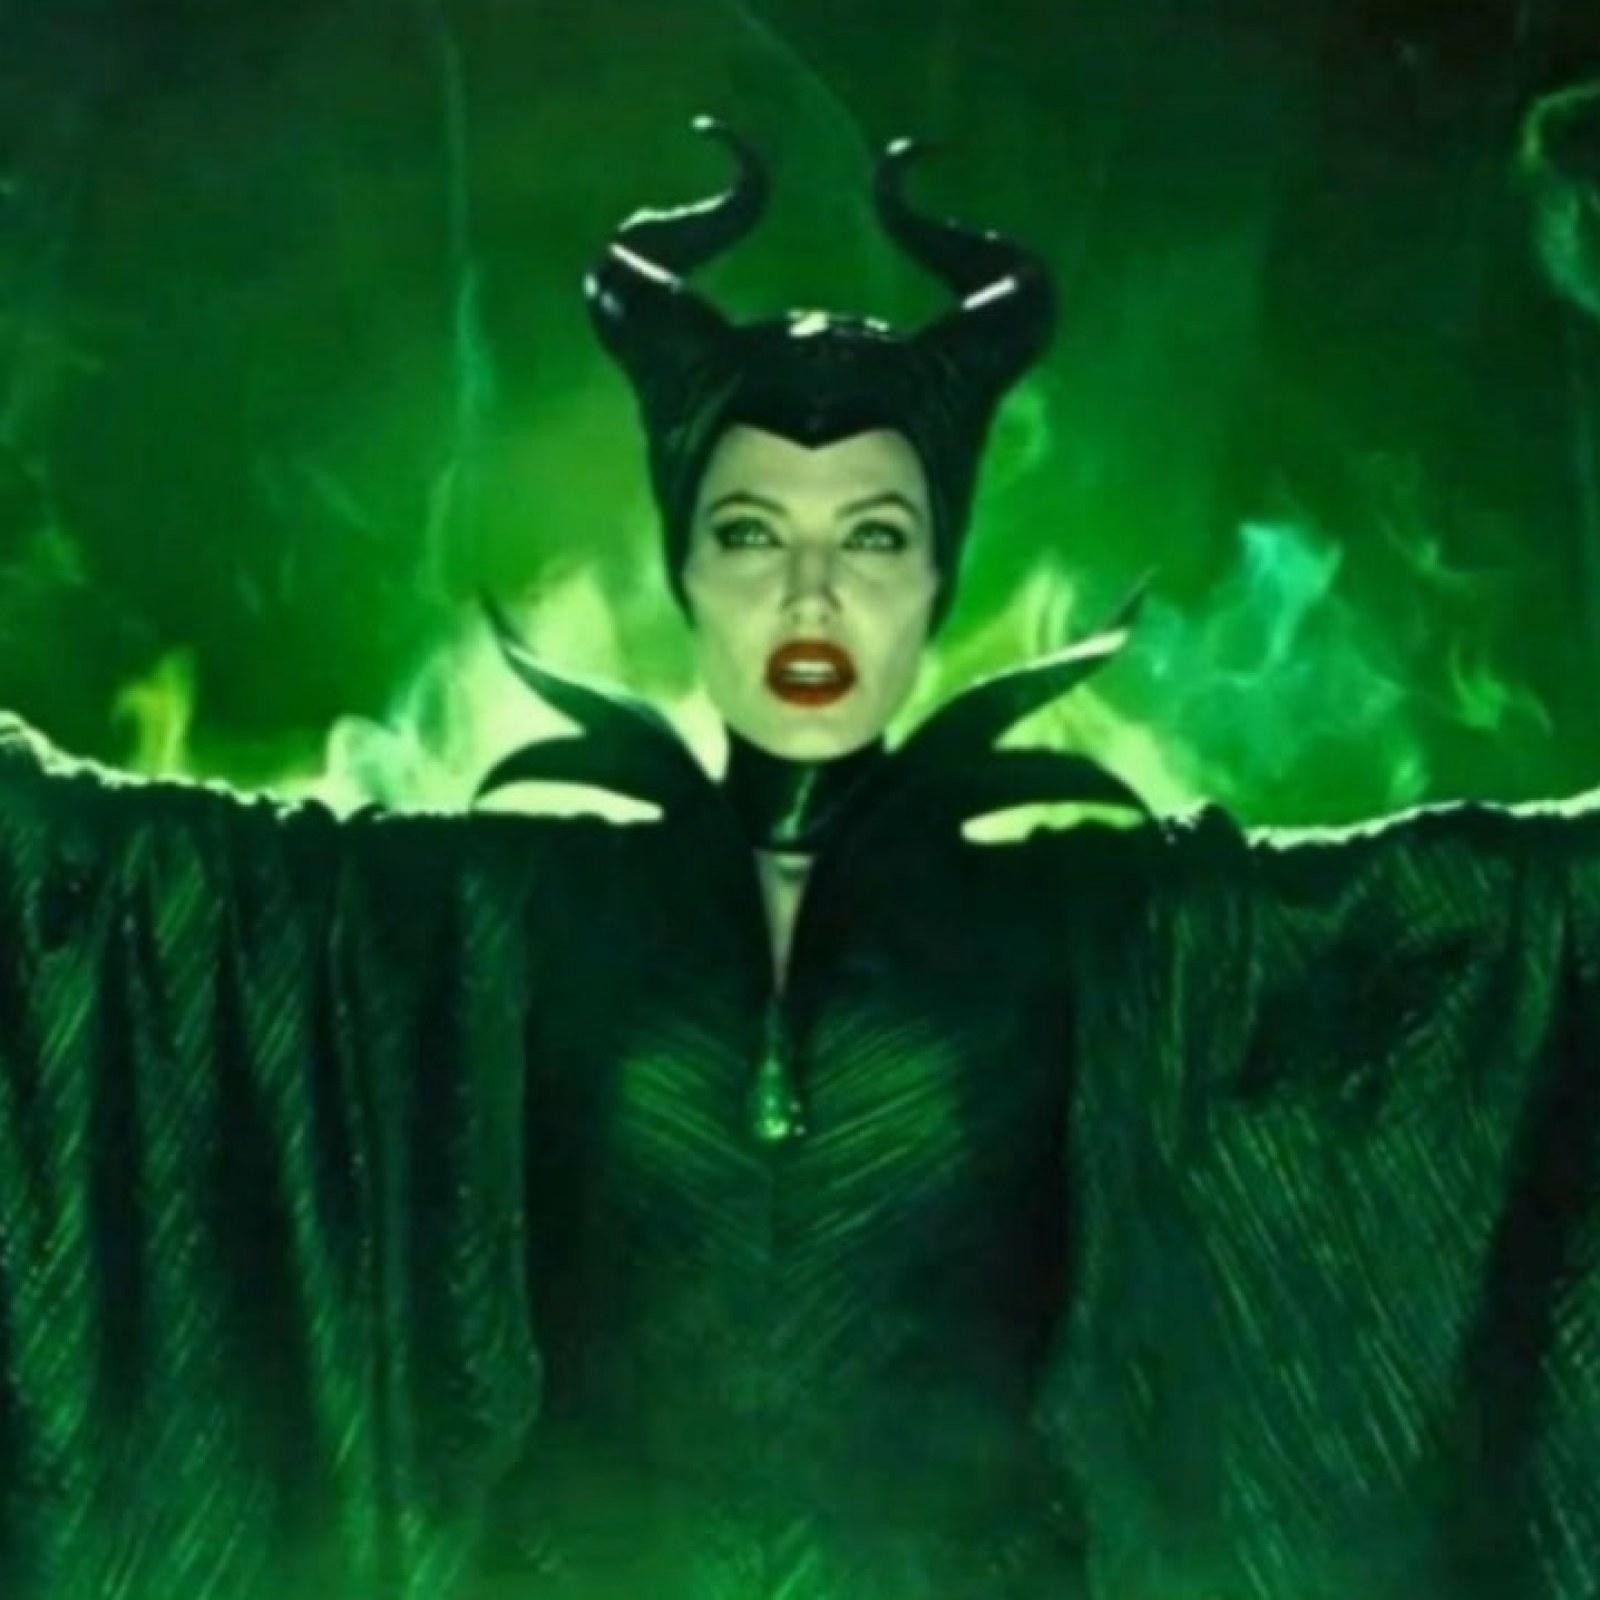 Maleficent 2' Release Date, Cast, Trailer, Runtime